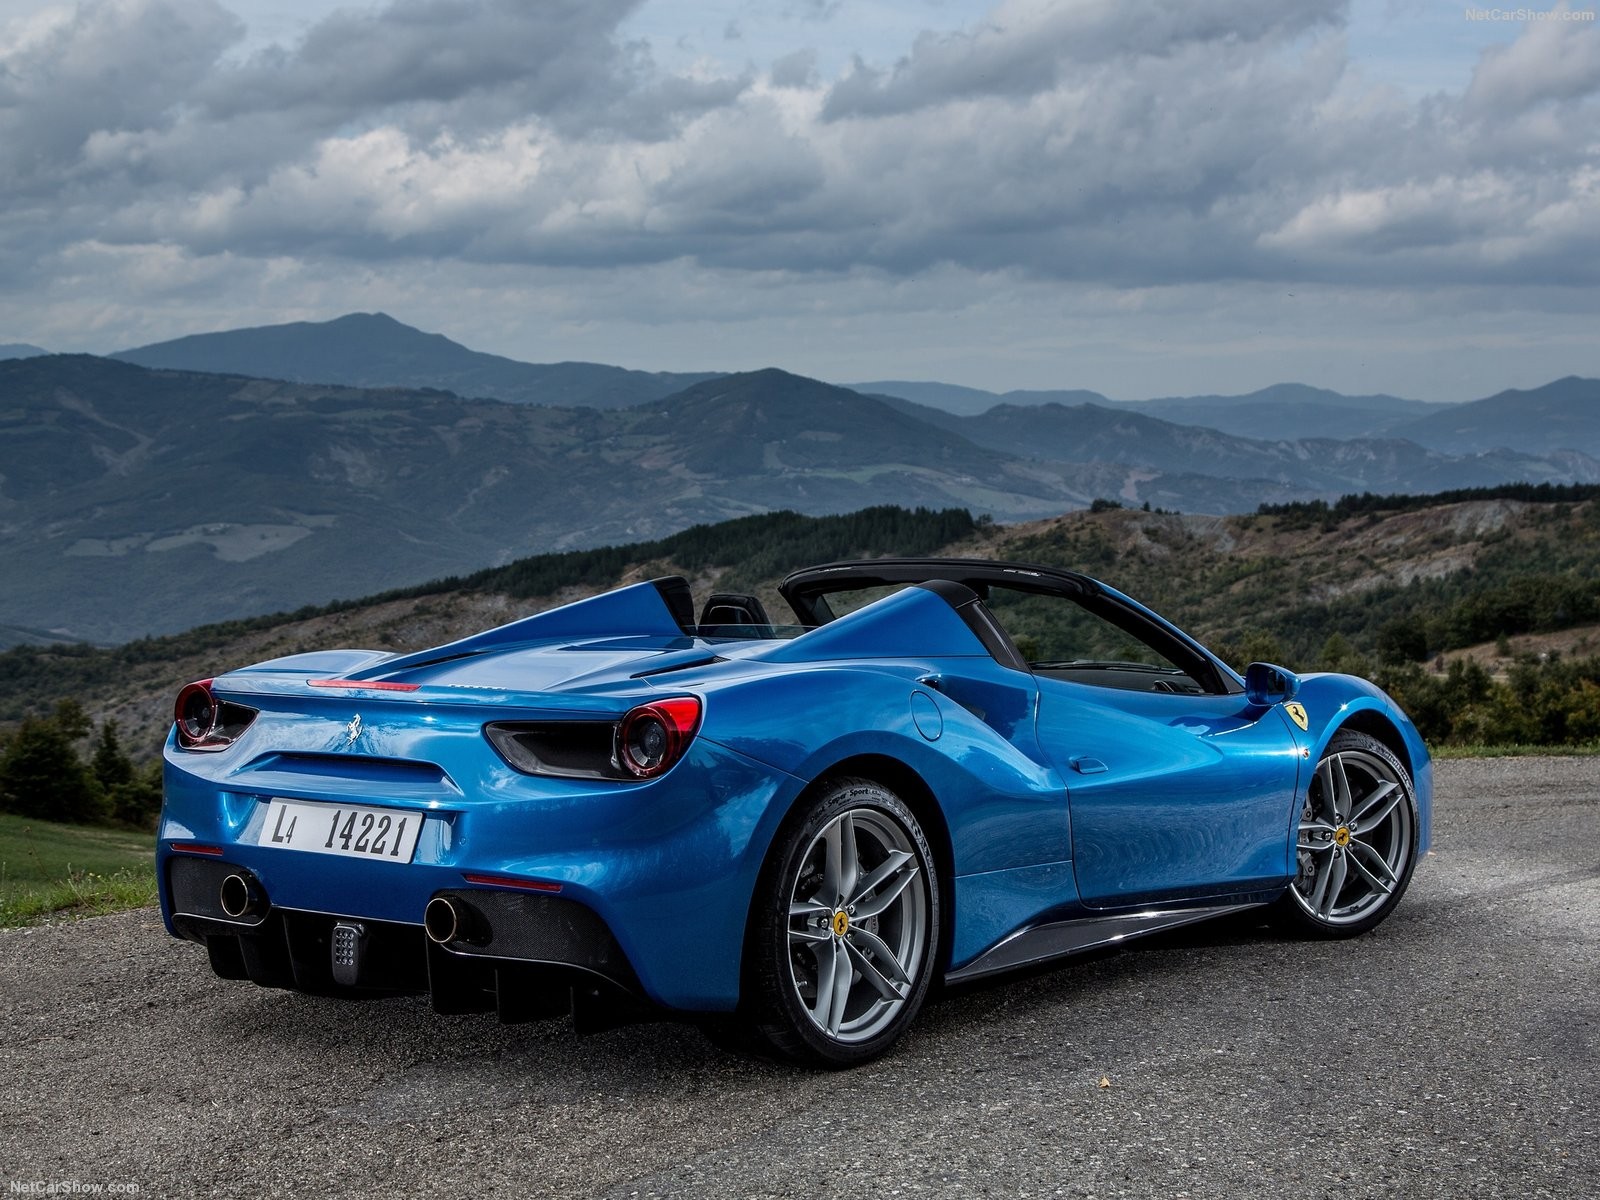 General 1600x1200 Ferrari Ferrari 488 GTB car blue cars clouds hills vehicle numbers italian cars Stellantis